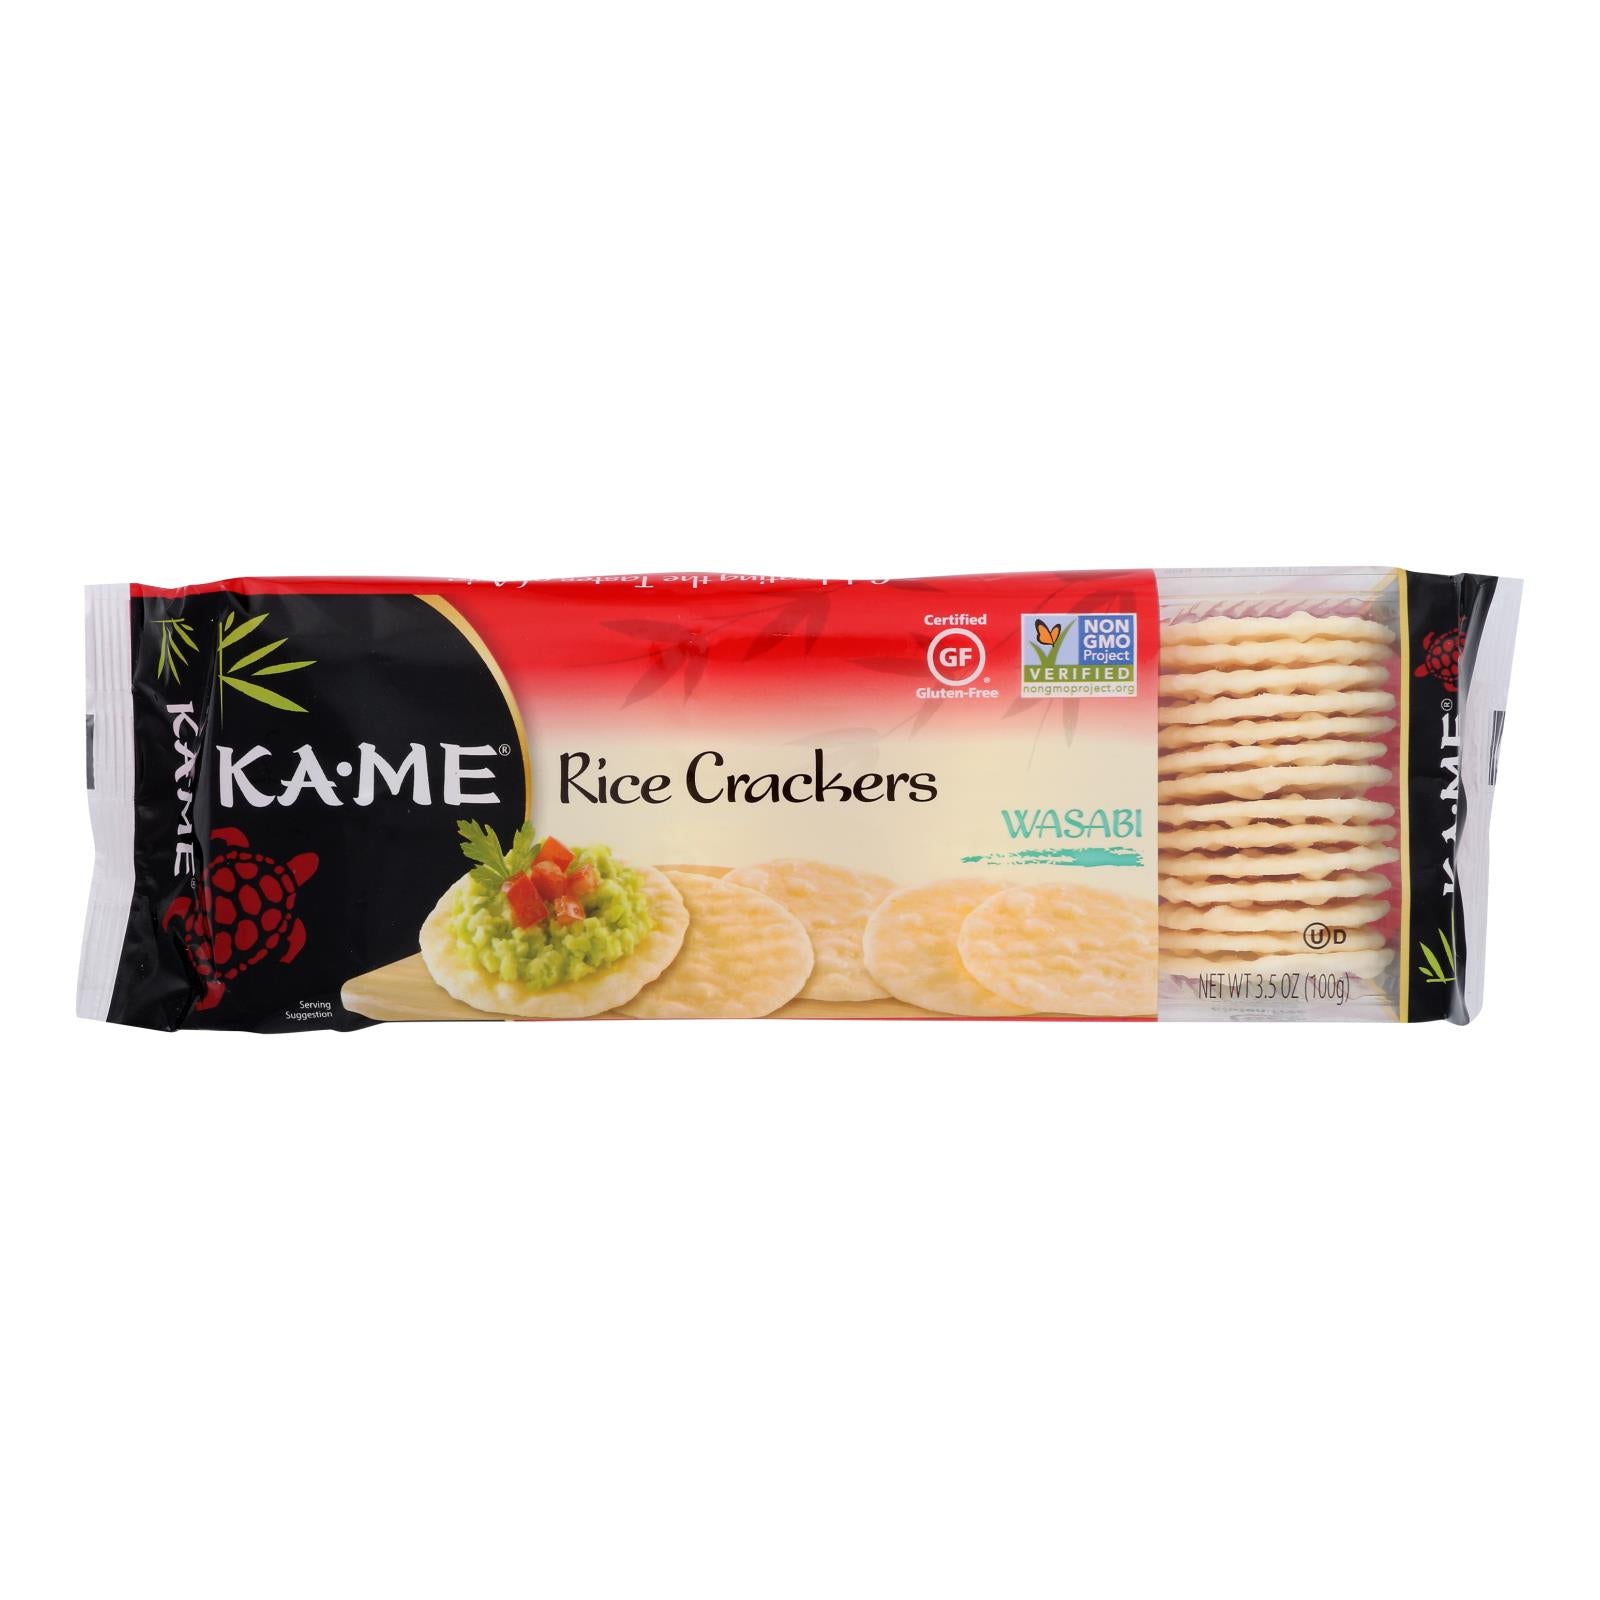 Kame Rice Crackers - Wasabi - 3.5 Oz - Case Of 12